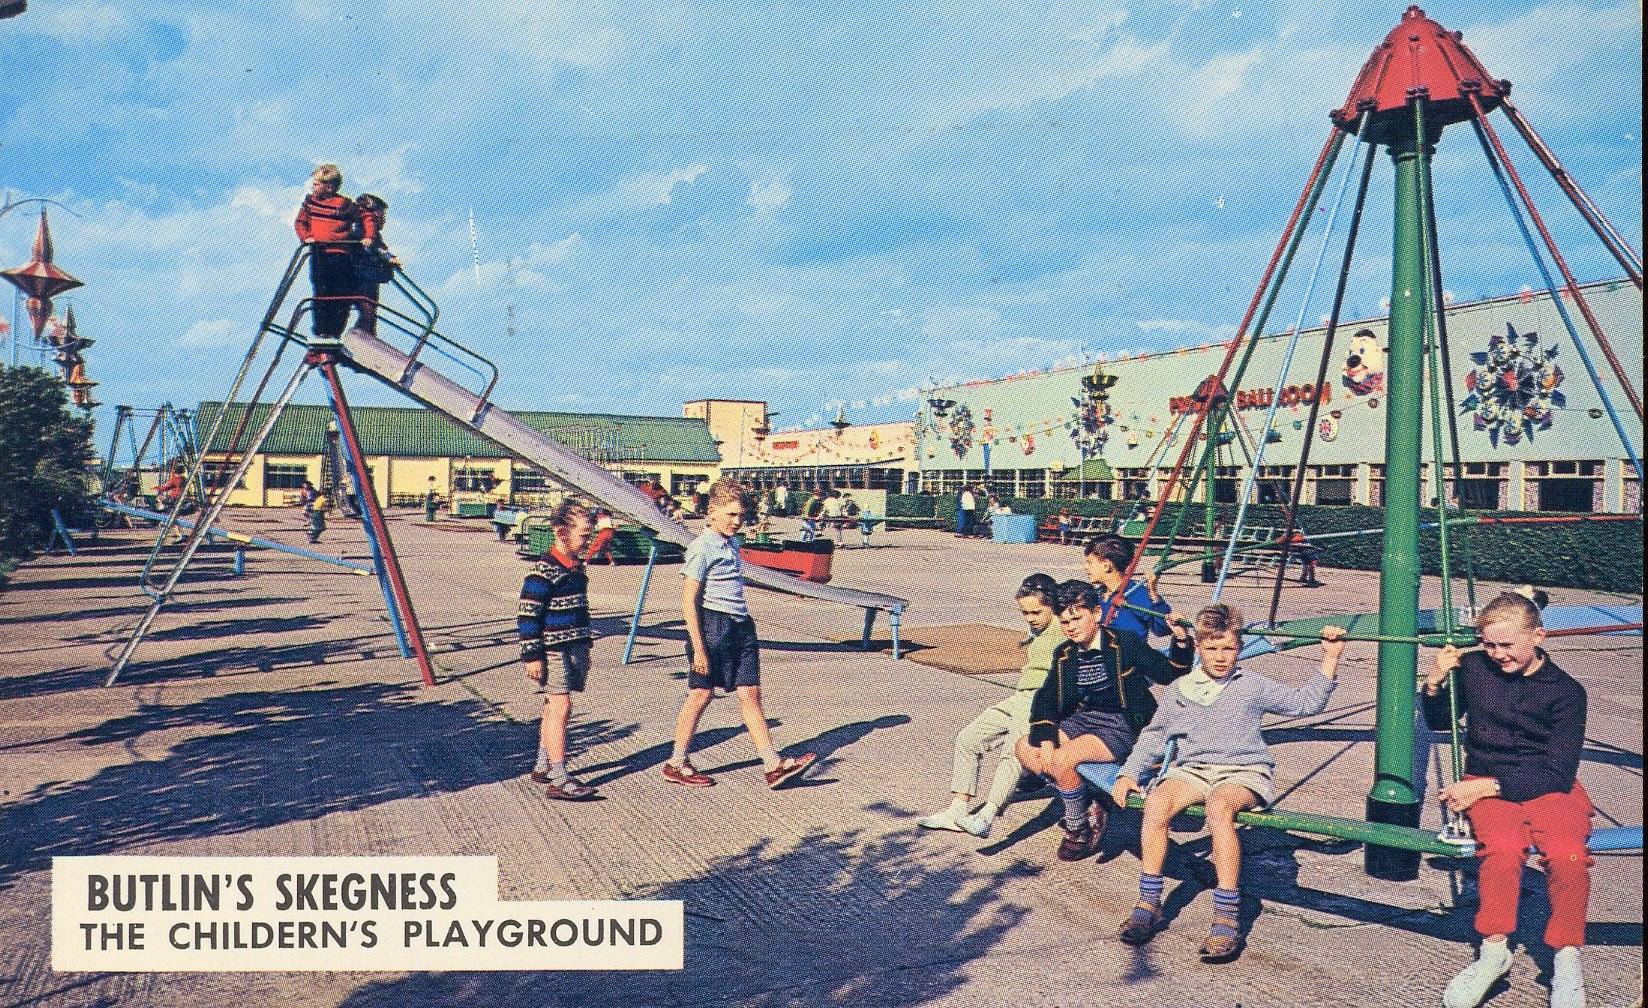 Whatever 'childern' were, this was their playground.